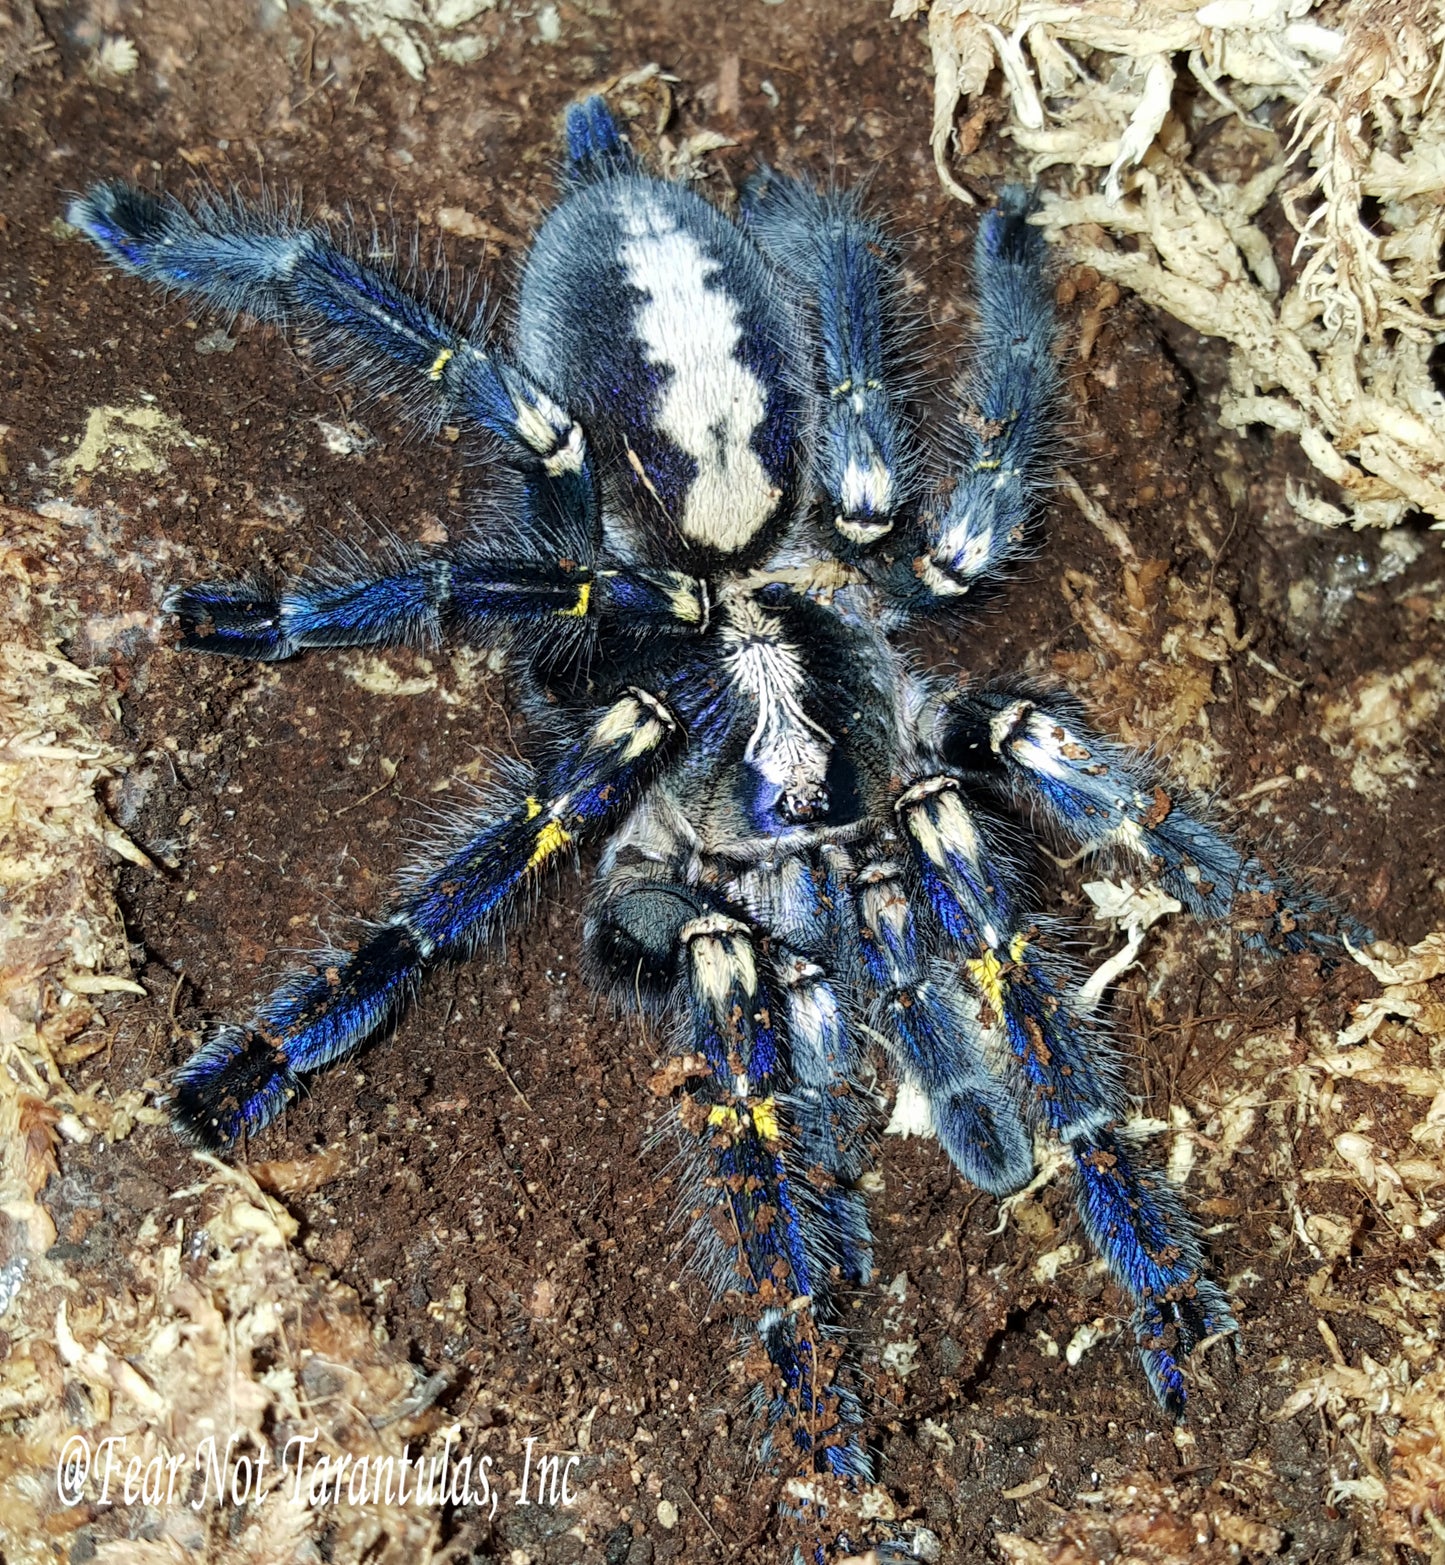 Poecilotheria metallica (Gooty Sapphire Ornamental Tarantula) around 1 1/4" - 1 1/2"